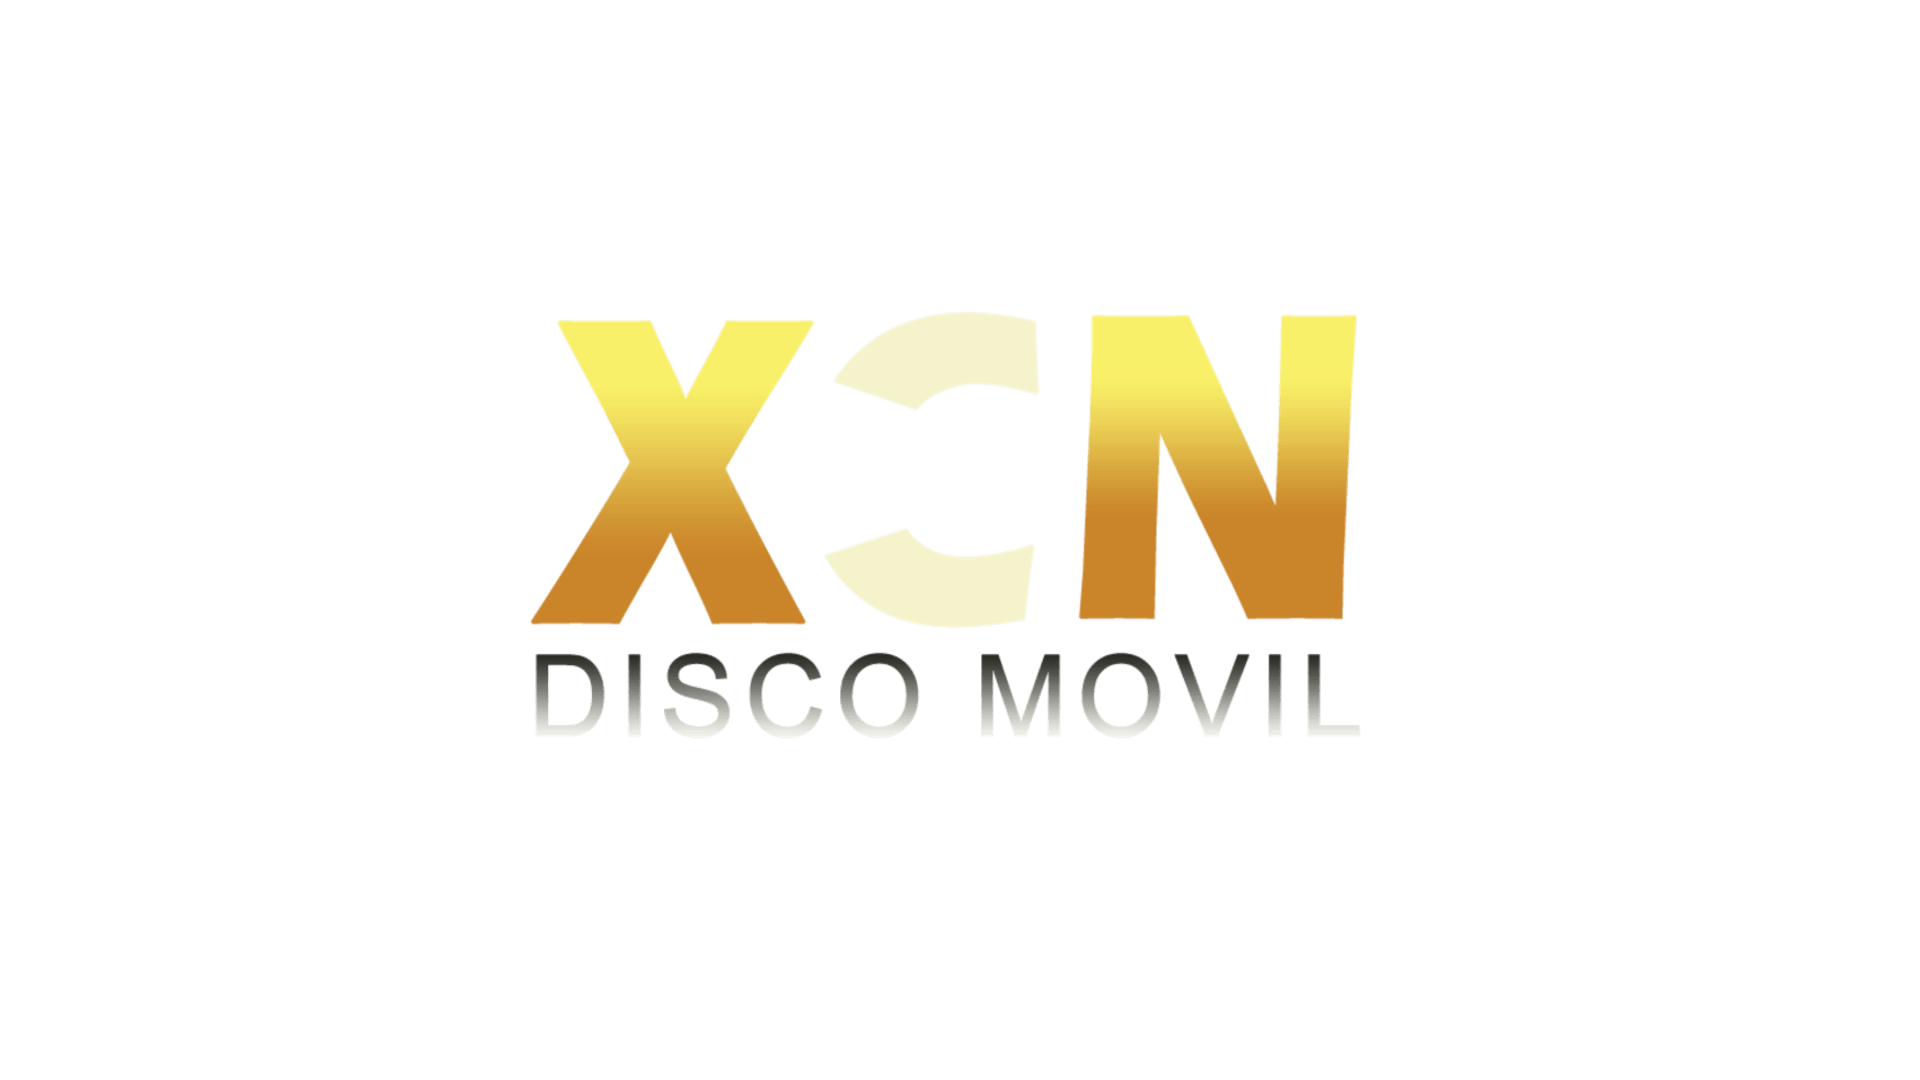 Discoteca Movil XCN